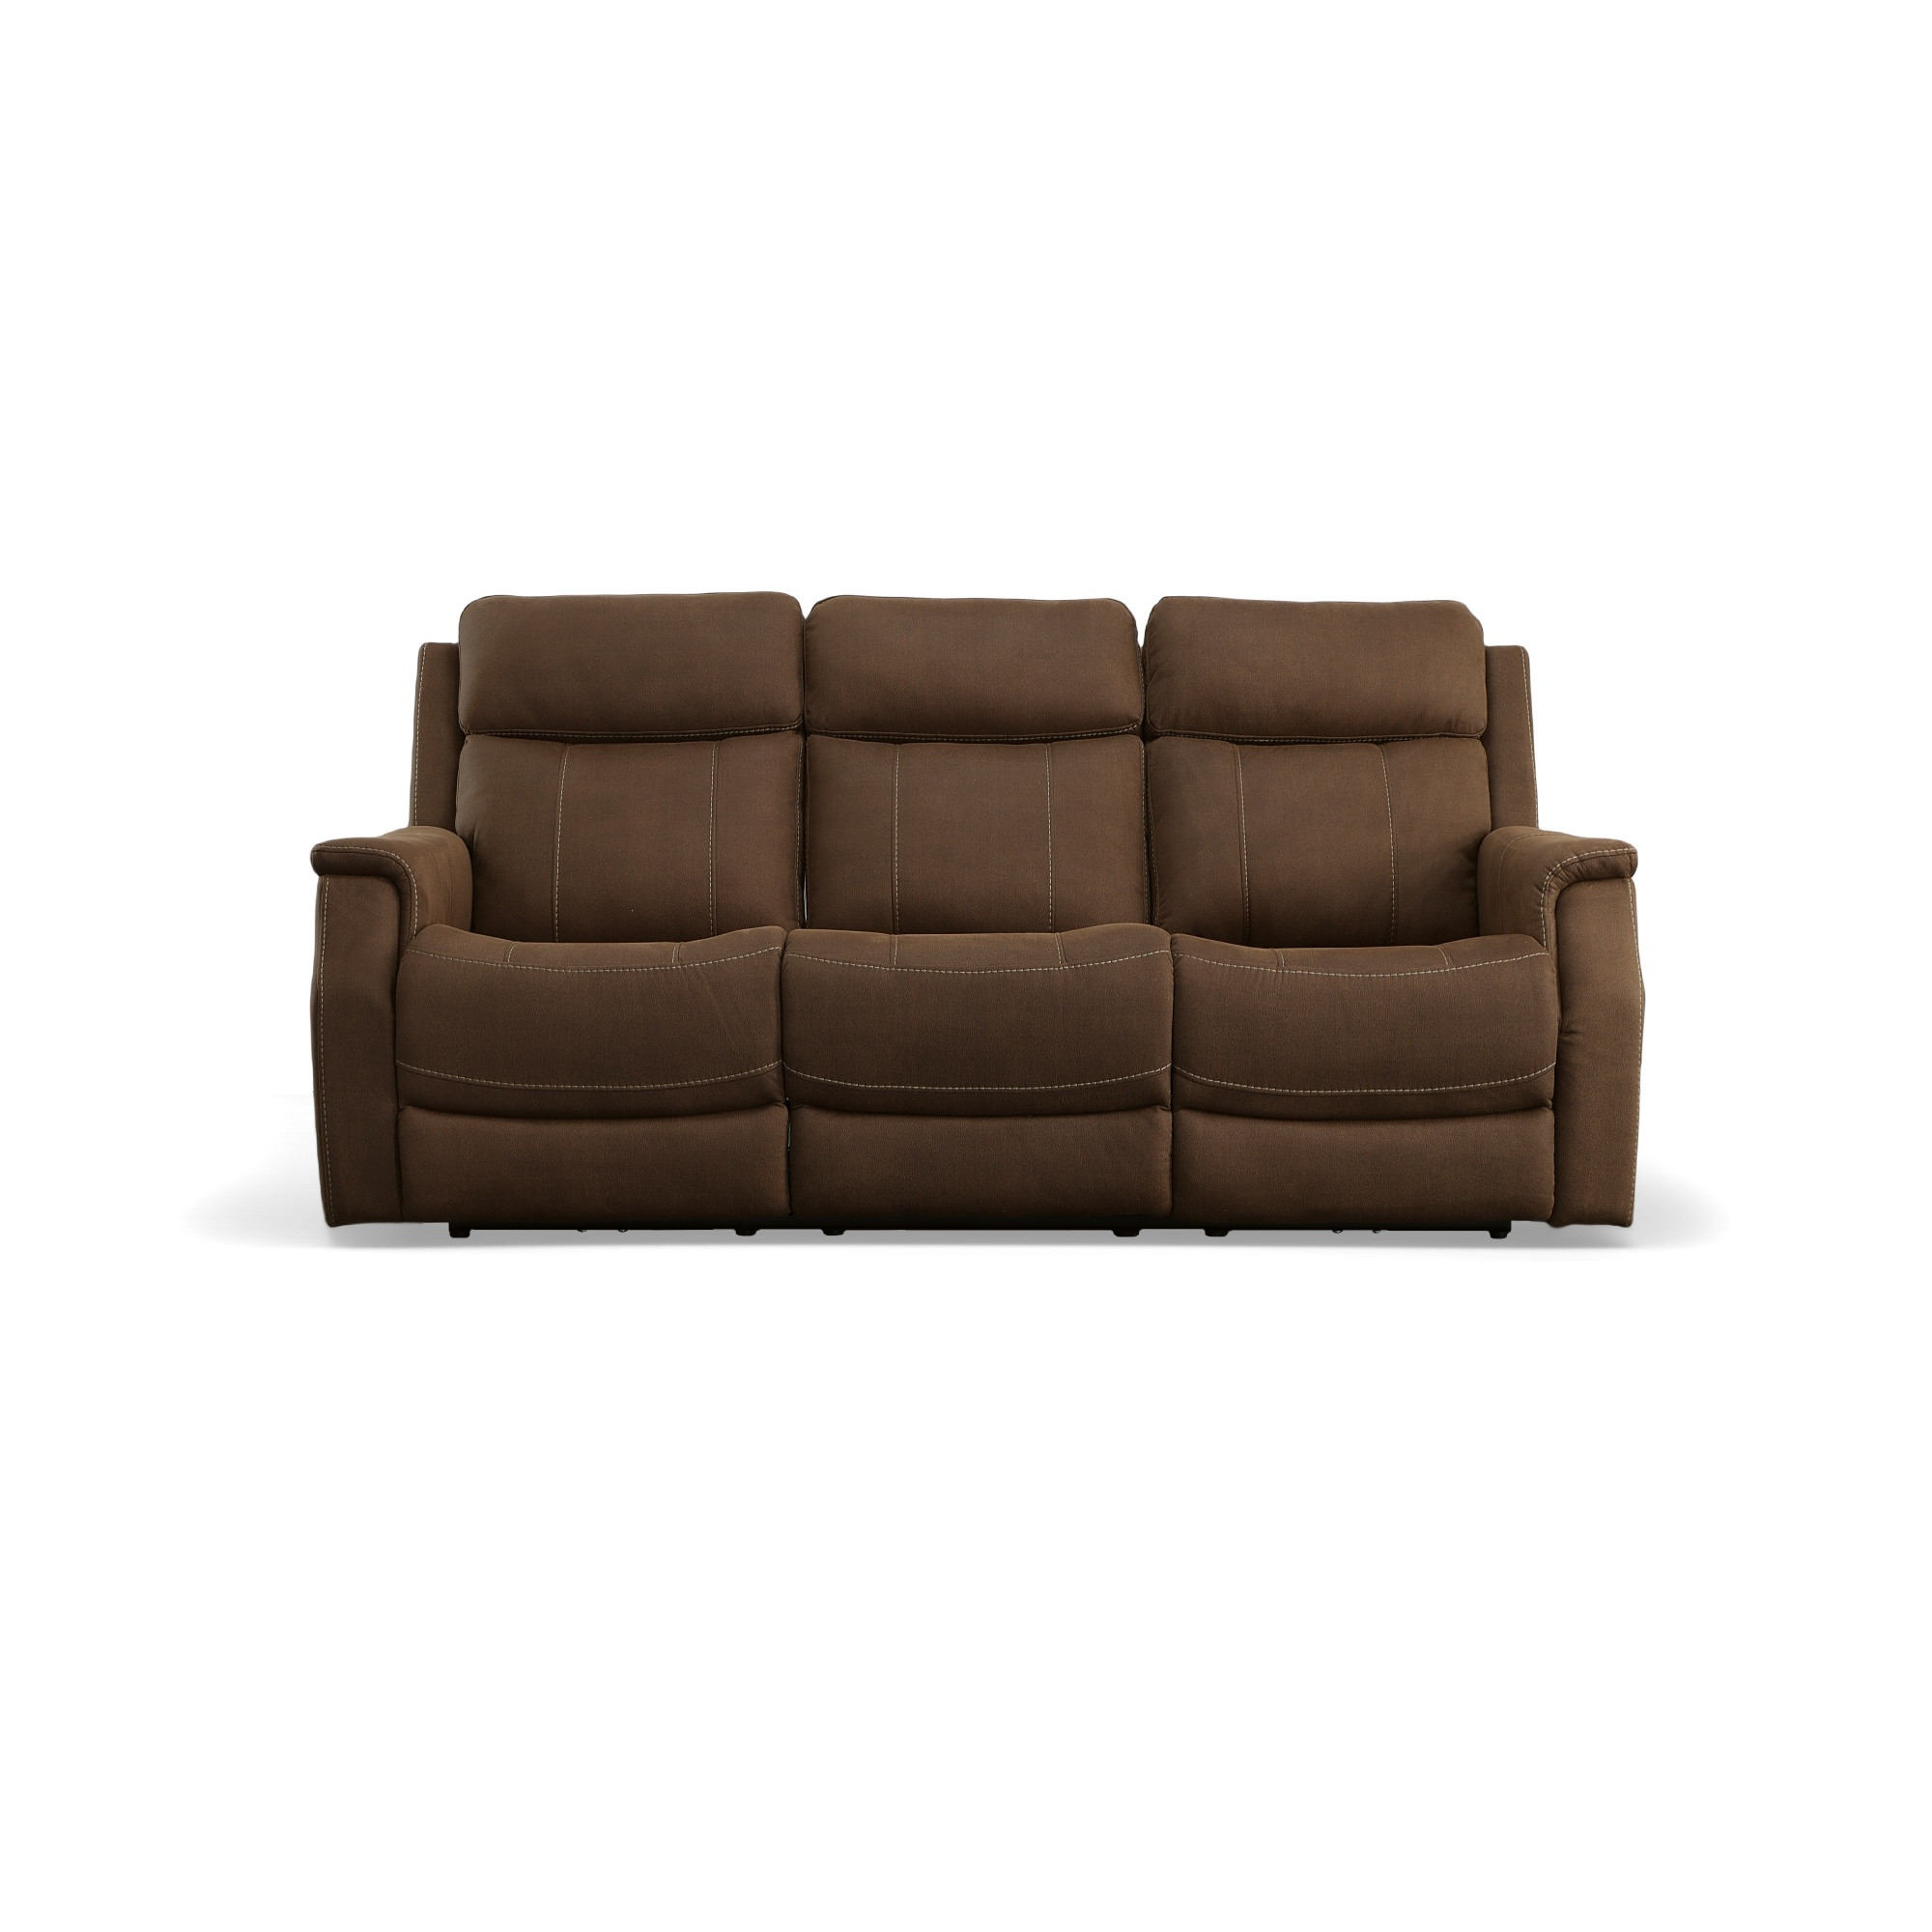 Flexsteel Easton Brown Power Reclining Sofa with Power Headrests and Lumbar